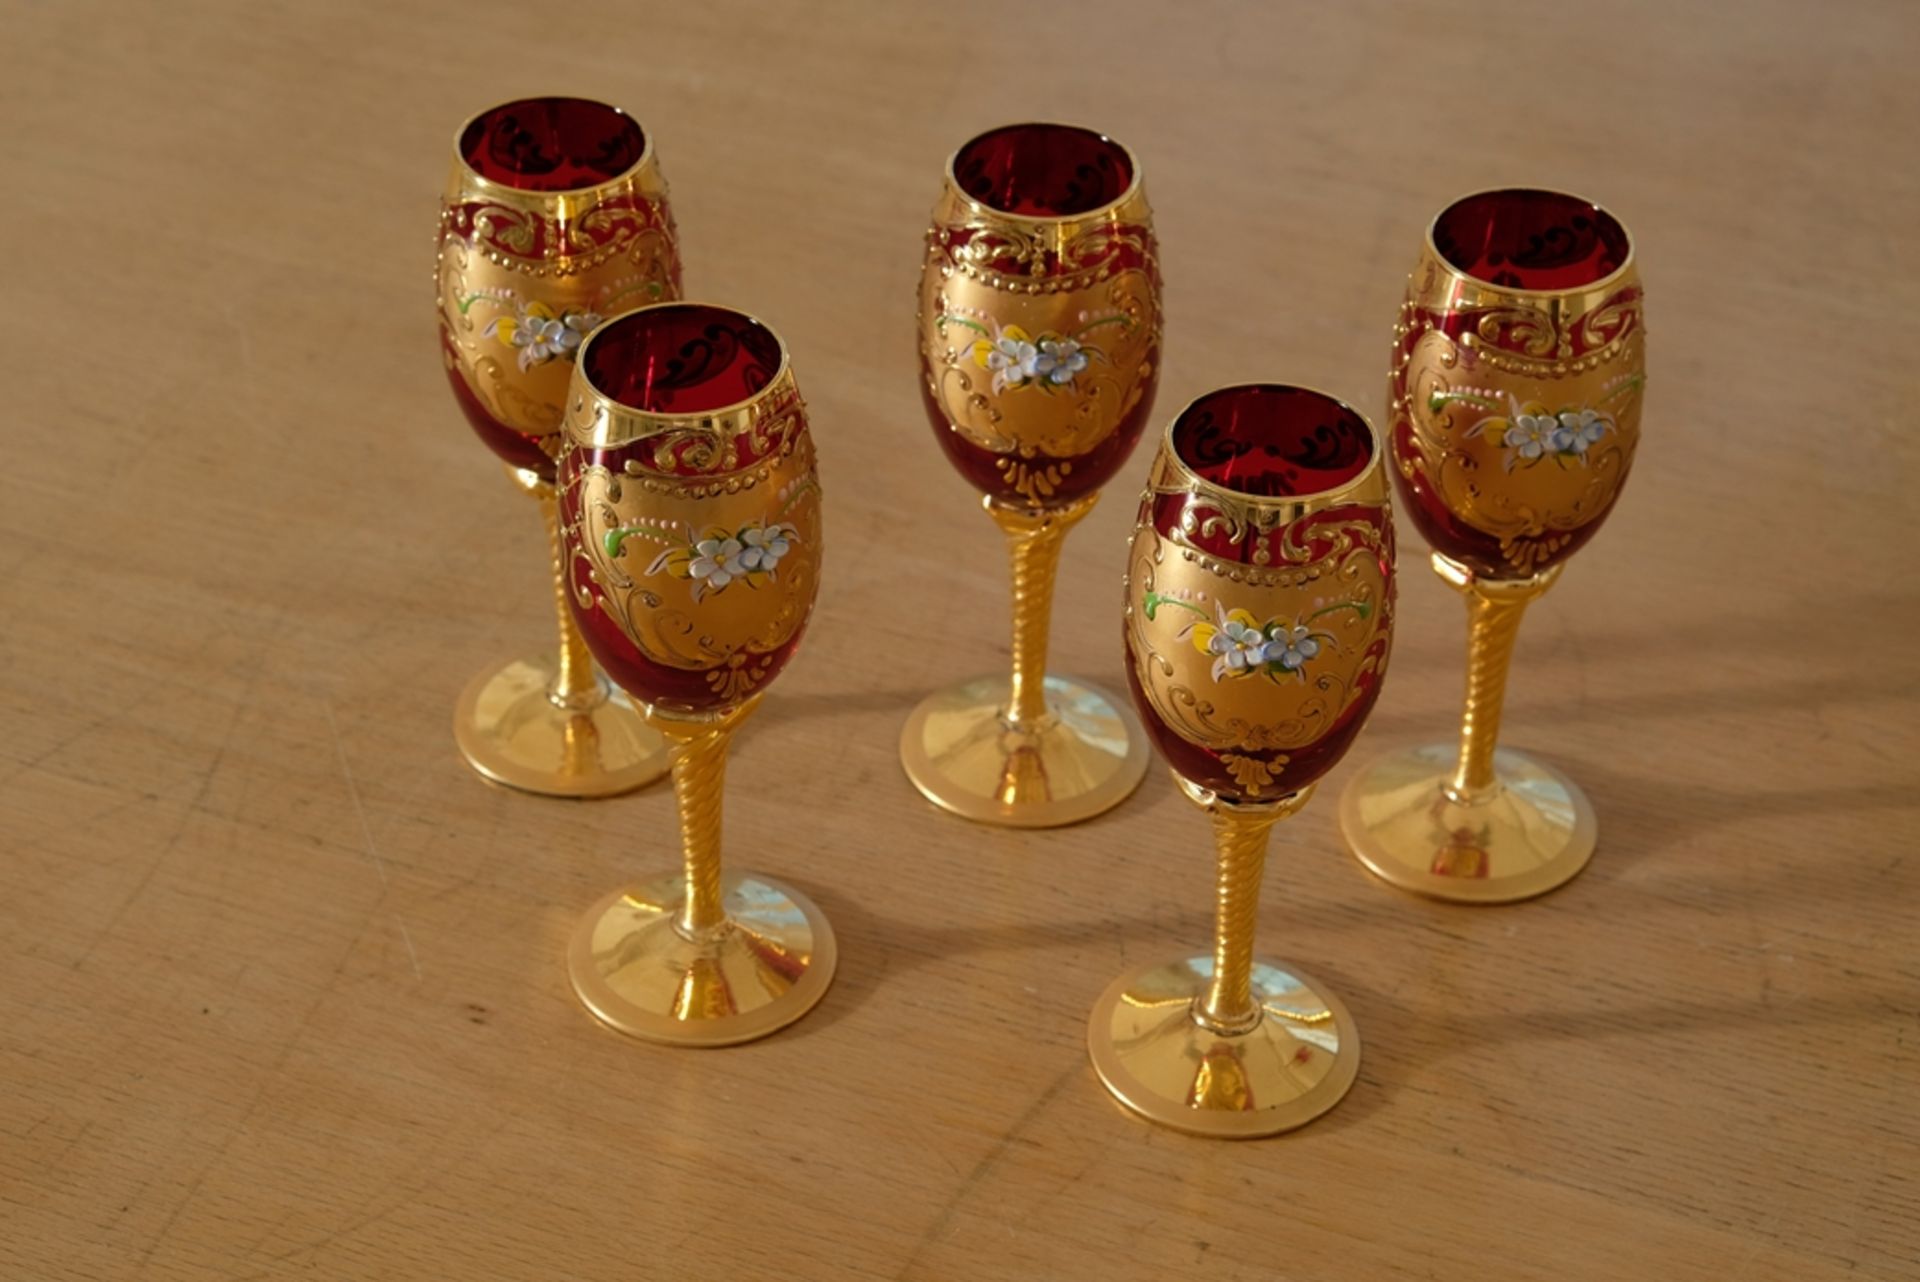 Six Murano wine glasses, Trefuochi, original Venetian wine glasses, ruby red glass, gold leaf ename - Image 2 of 4